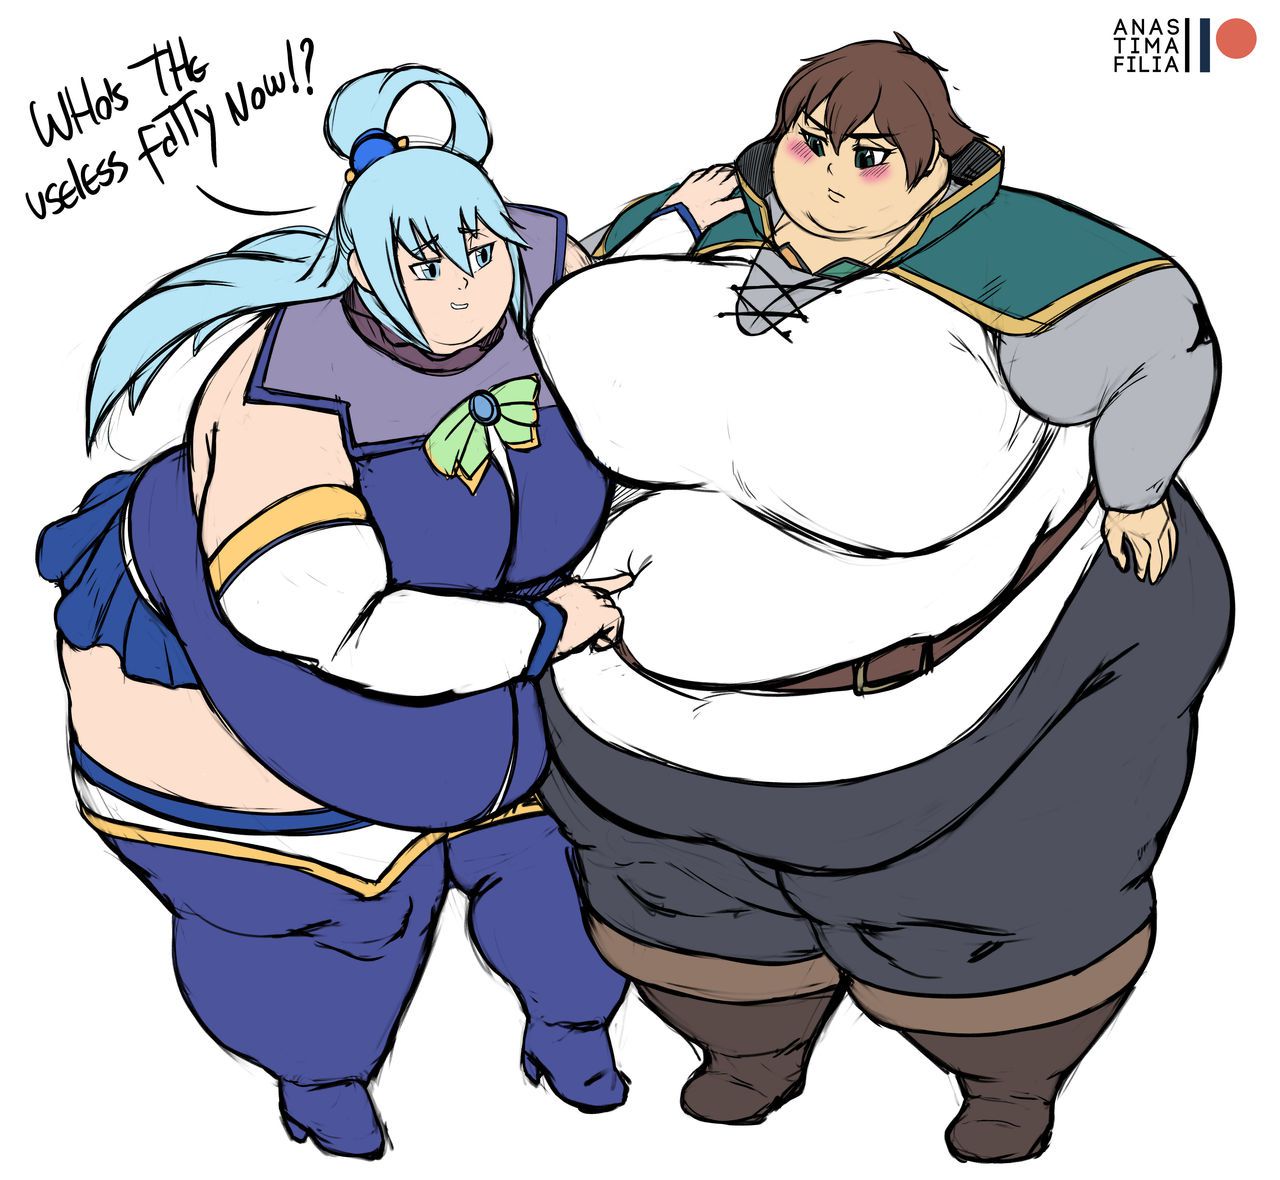 Konosuba Aqua and Genderbent Kazuma Weight Gain by Anastimafilia 5